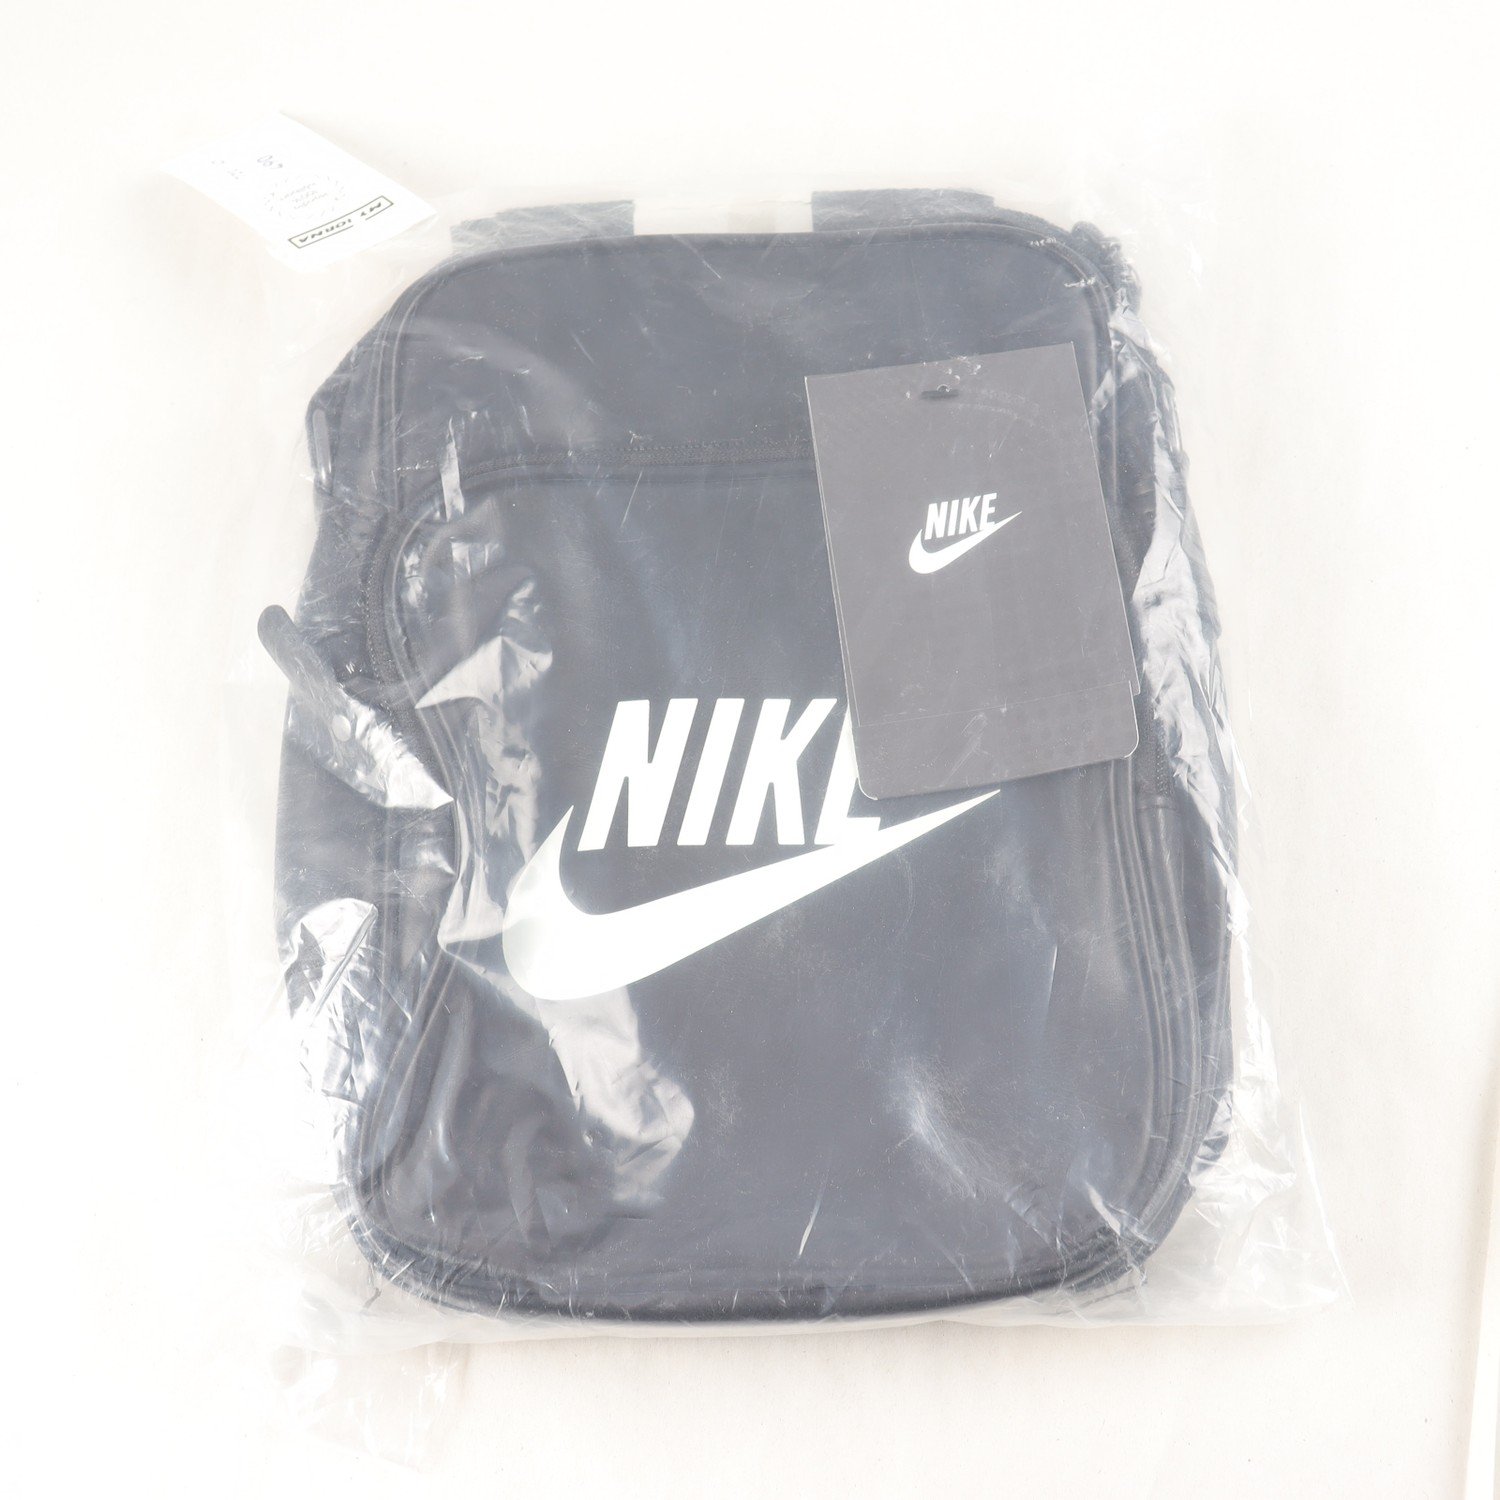 Väska, Nike, svart